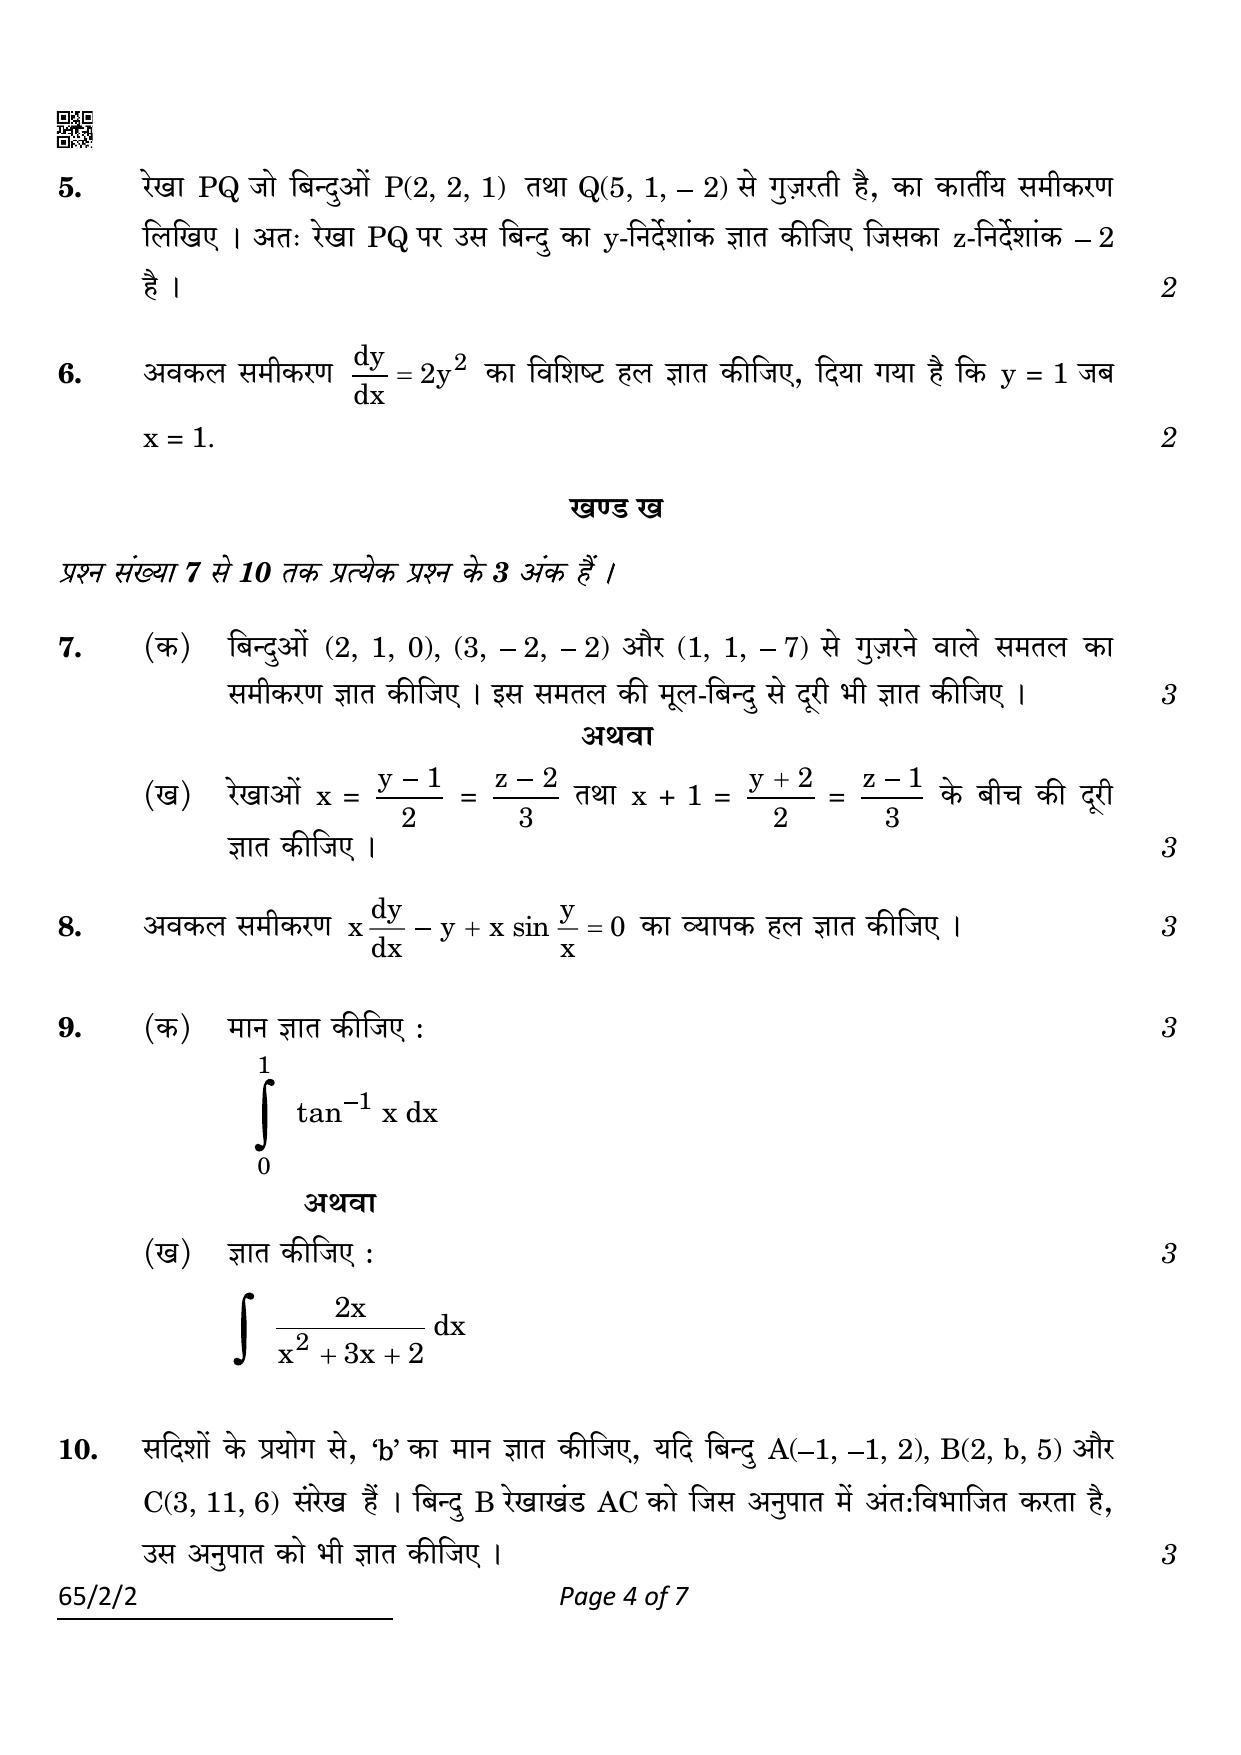 CBSE Class 12 65-2-2 Mathematics 2022 Question Paper - Page 4